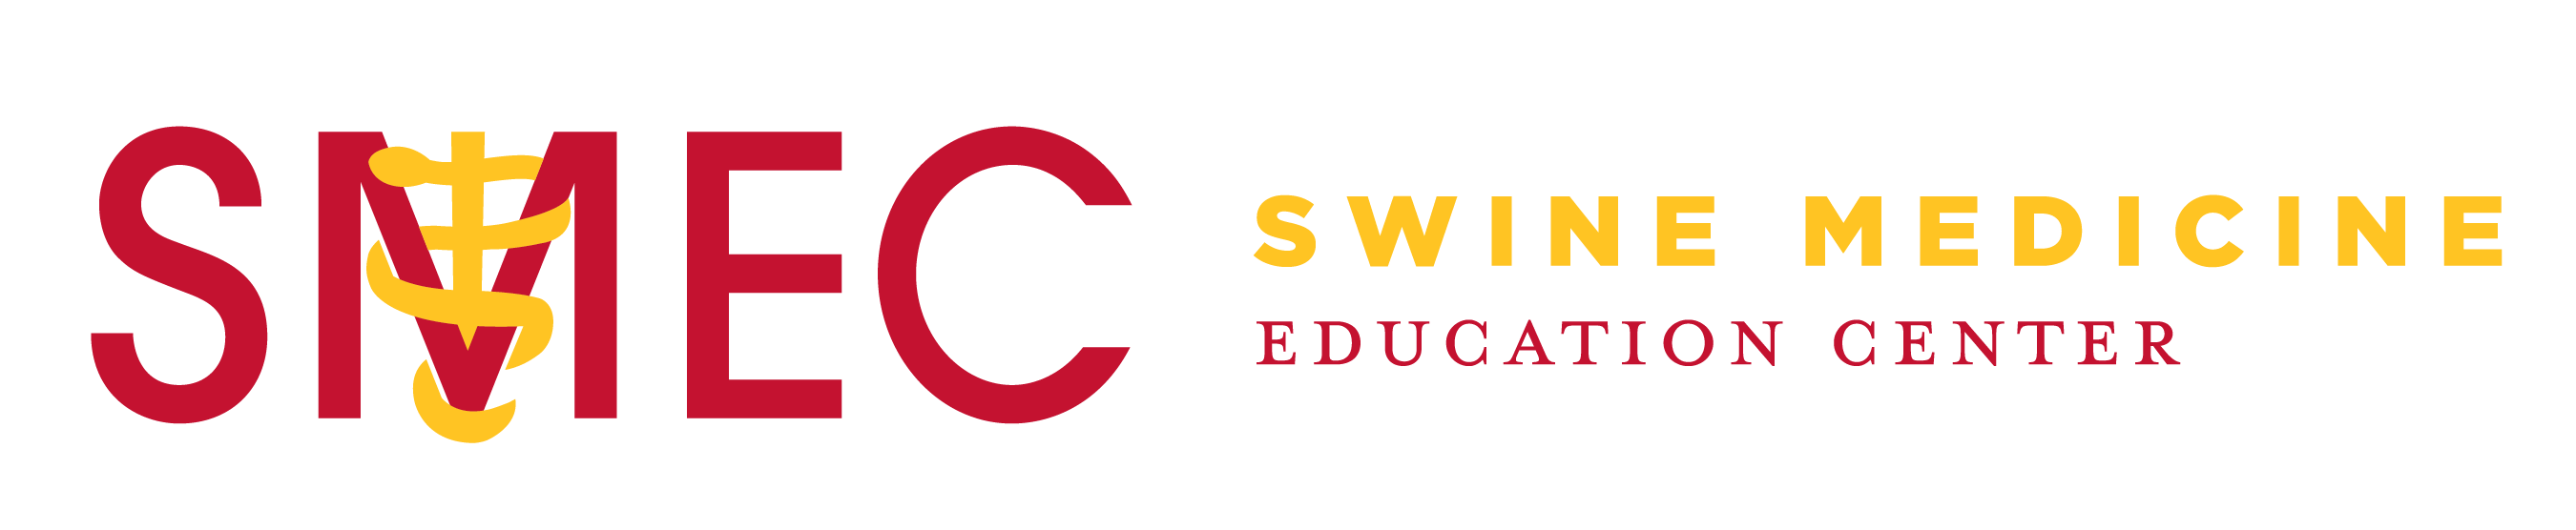 Swine Medicine Education Center